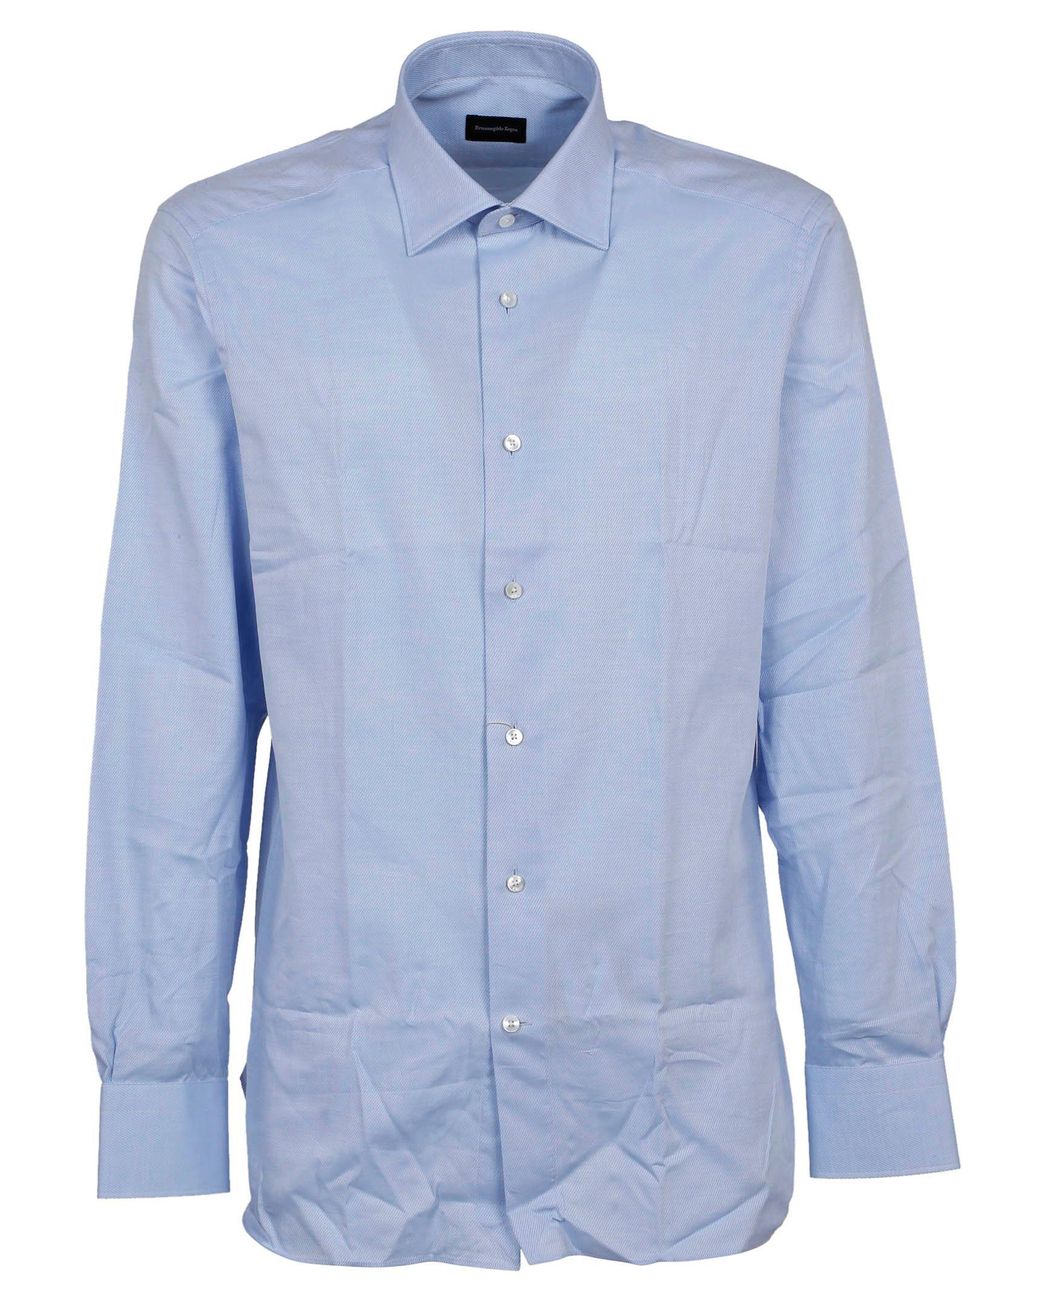 Z Zegna Cotton Shirt in Light Blue (Blue) for Men - Lyst